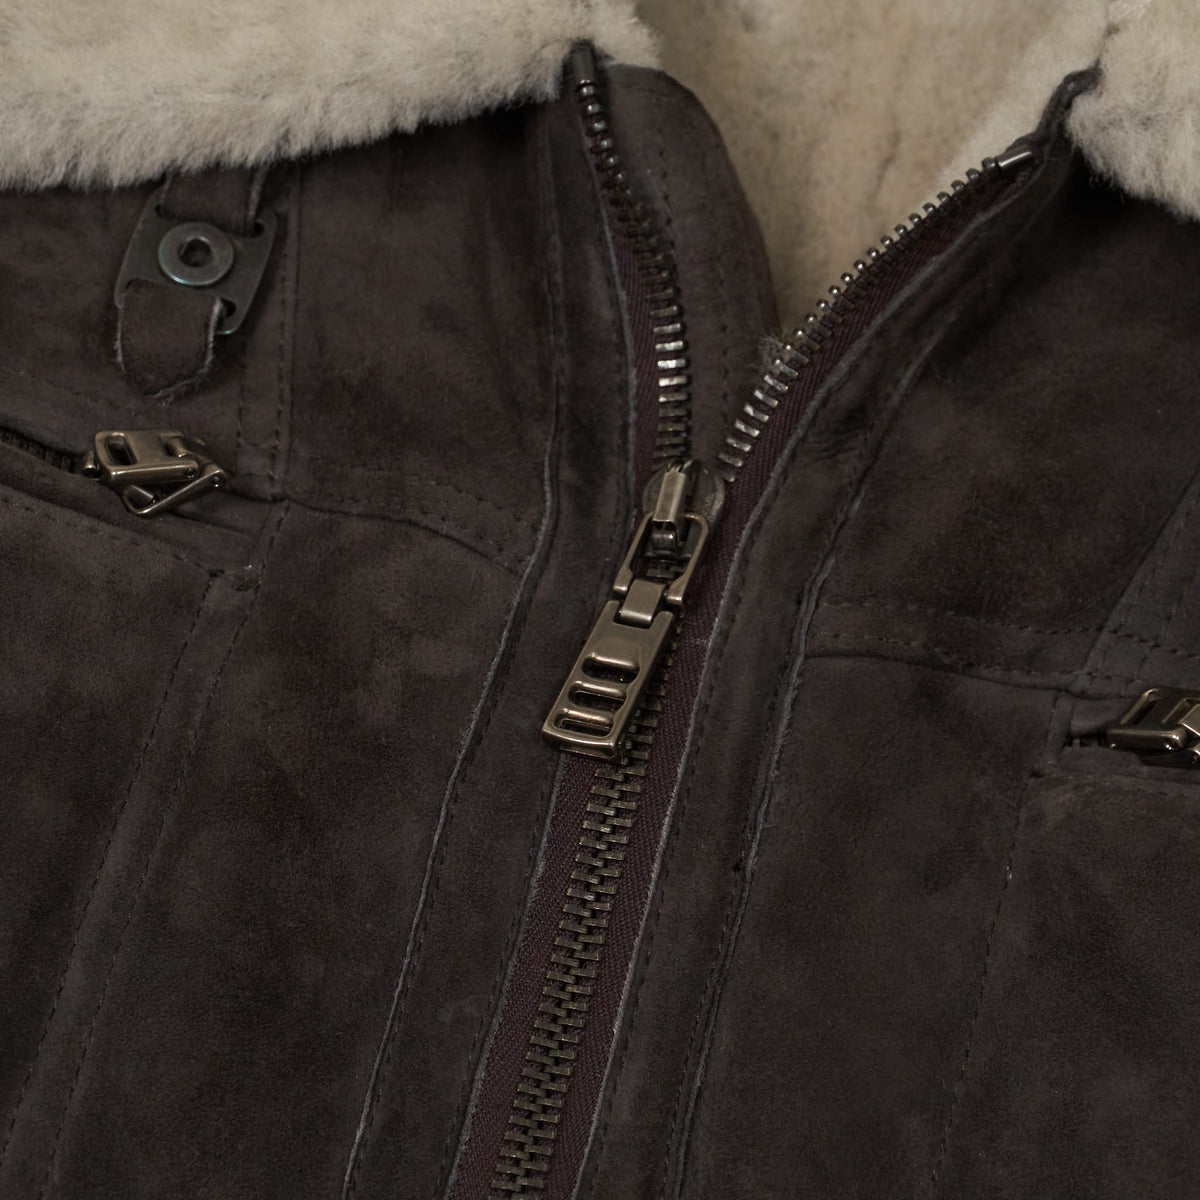 Stewart Shearling Leather Jacket